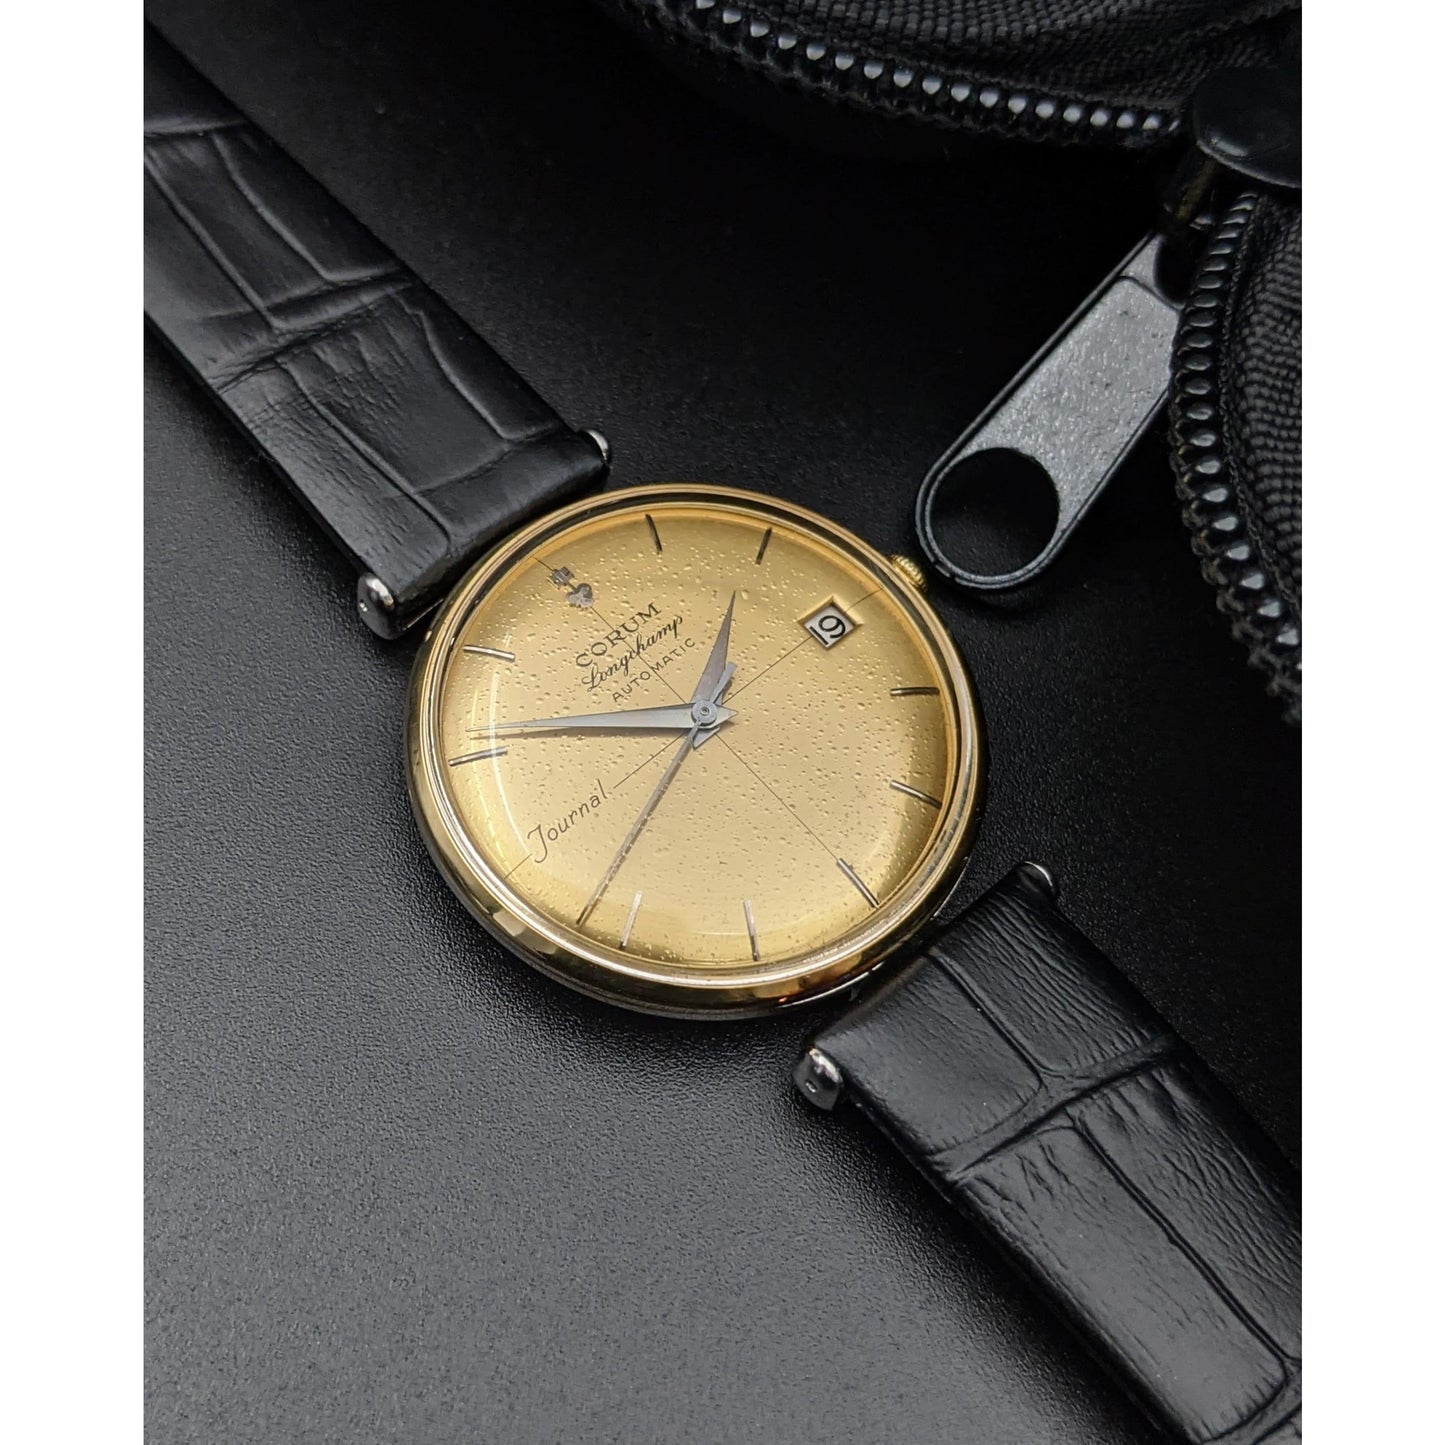 Corum Longchamps Journal Vimntage Automatic Watch - 1960's